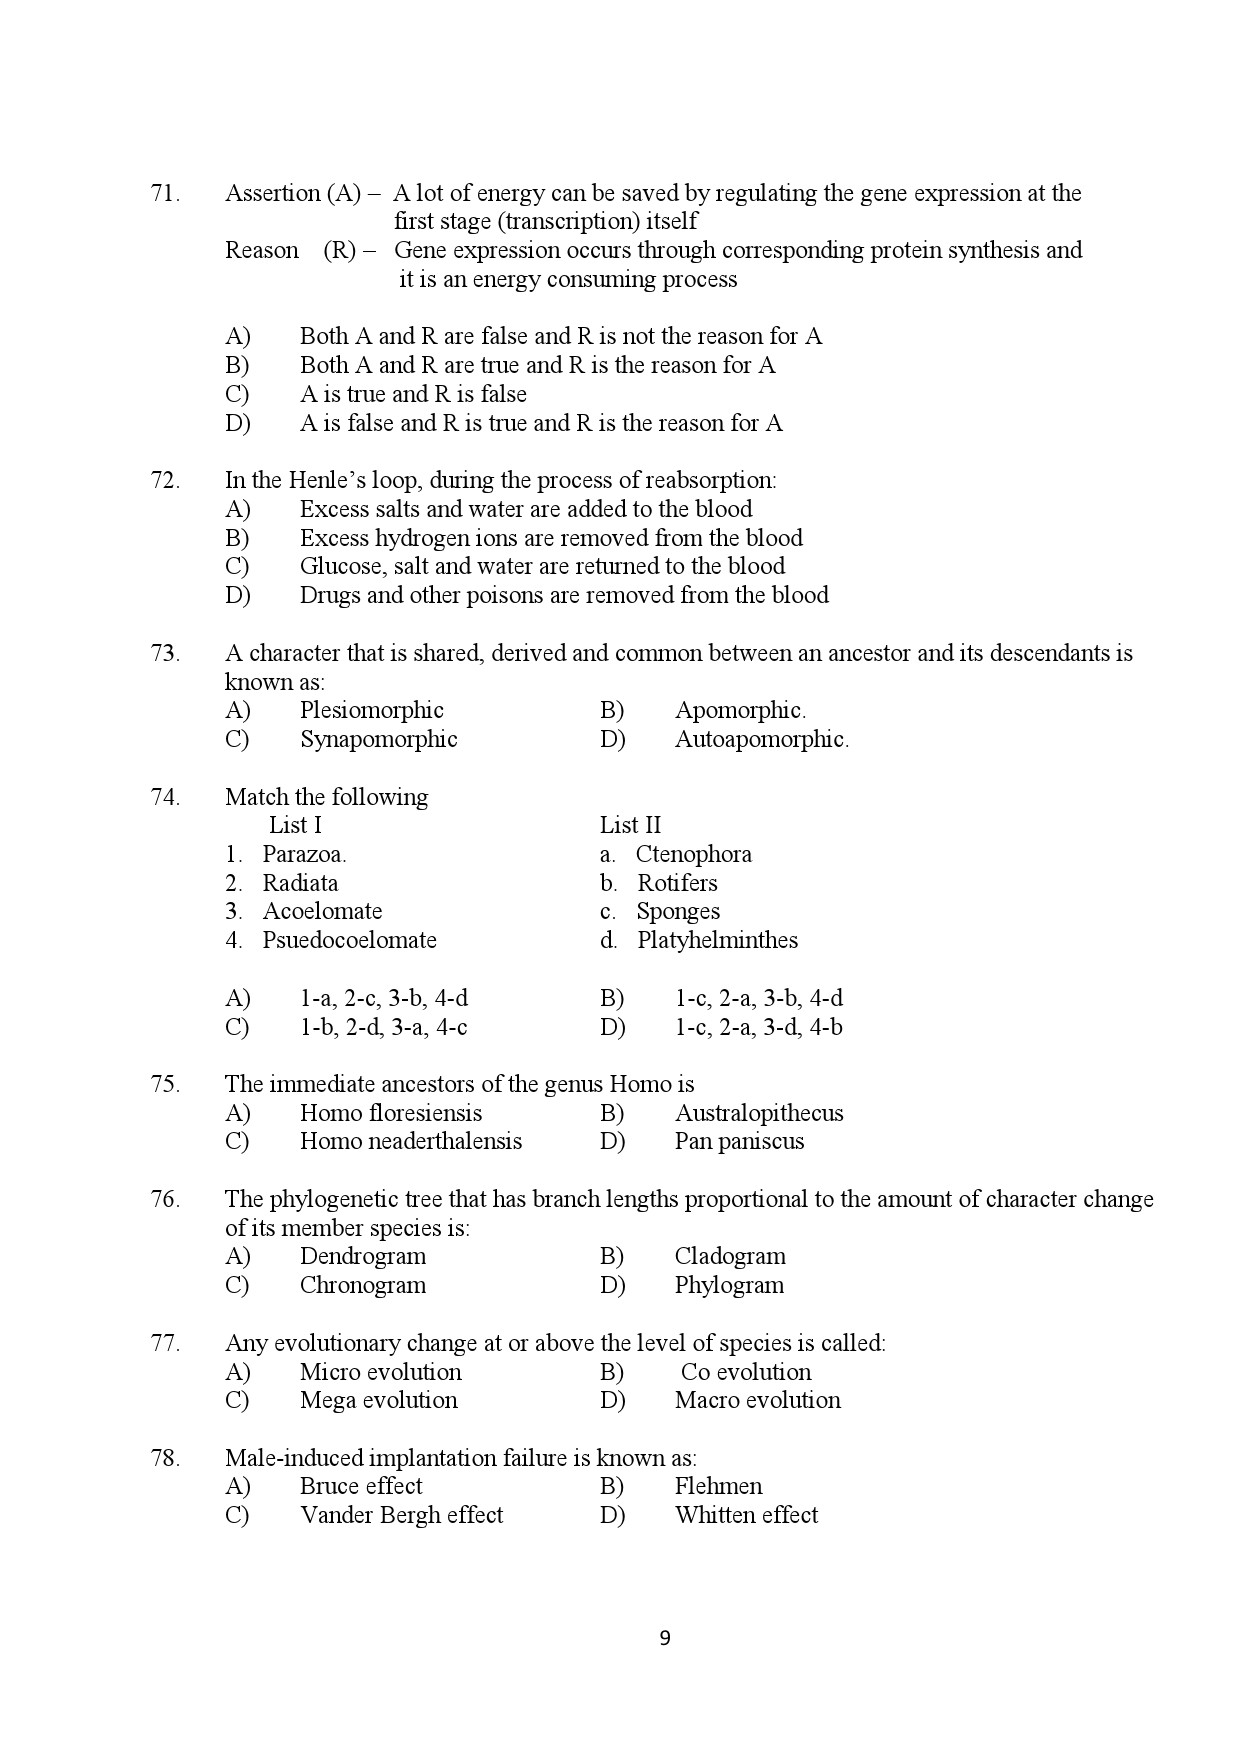 Kerala SET Zoology Exam Question Paper February 2020 9